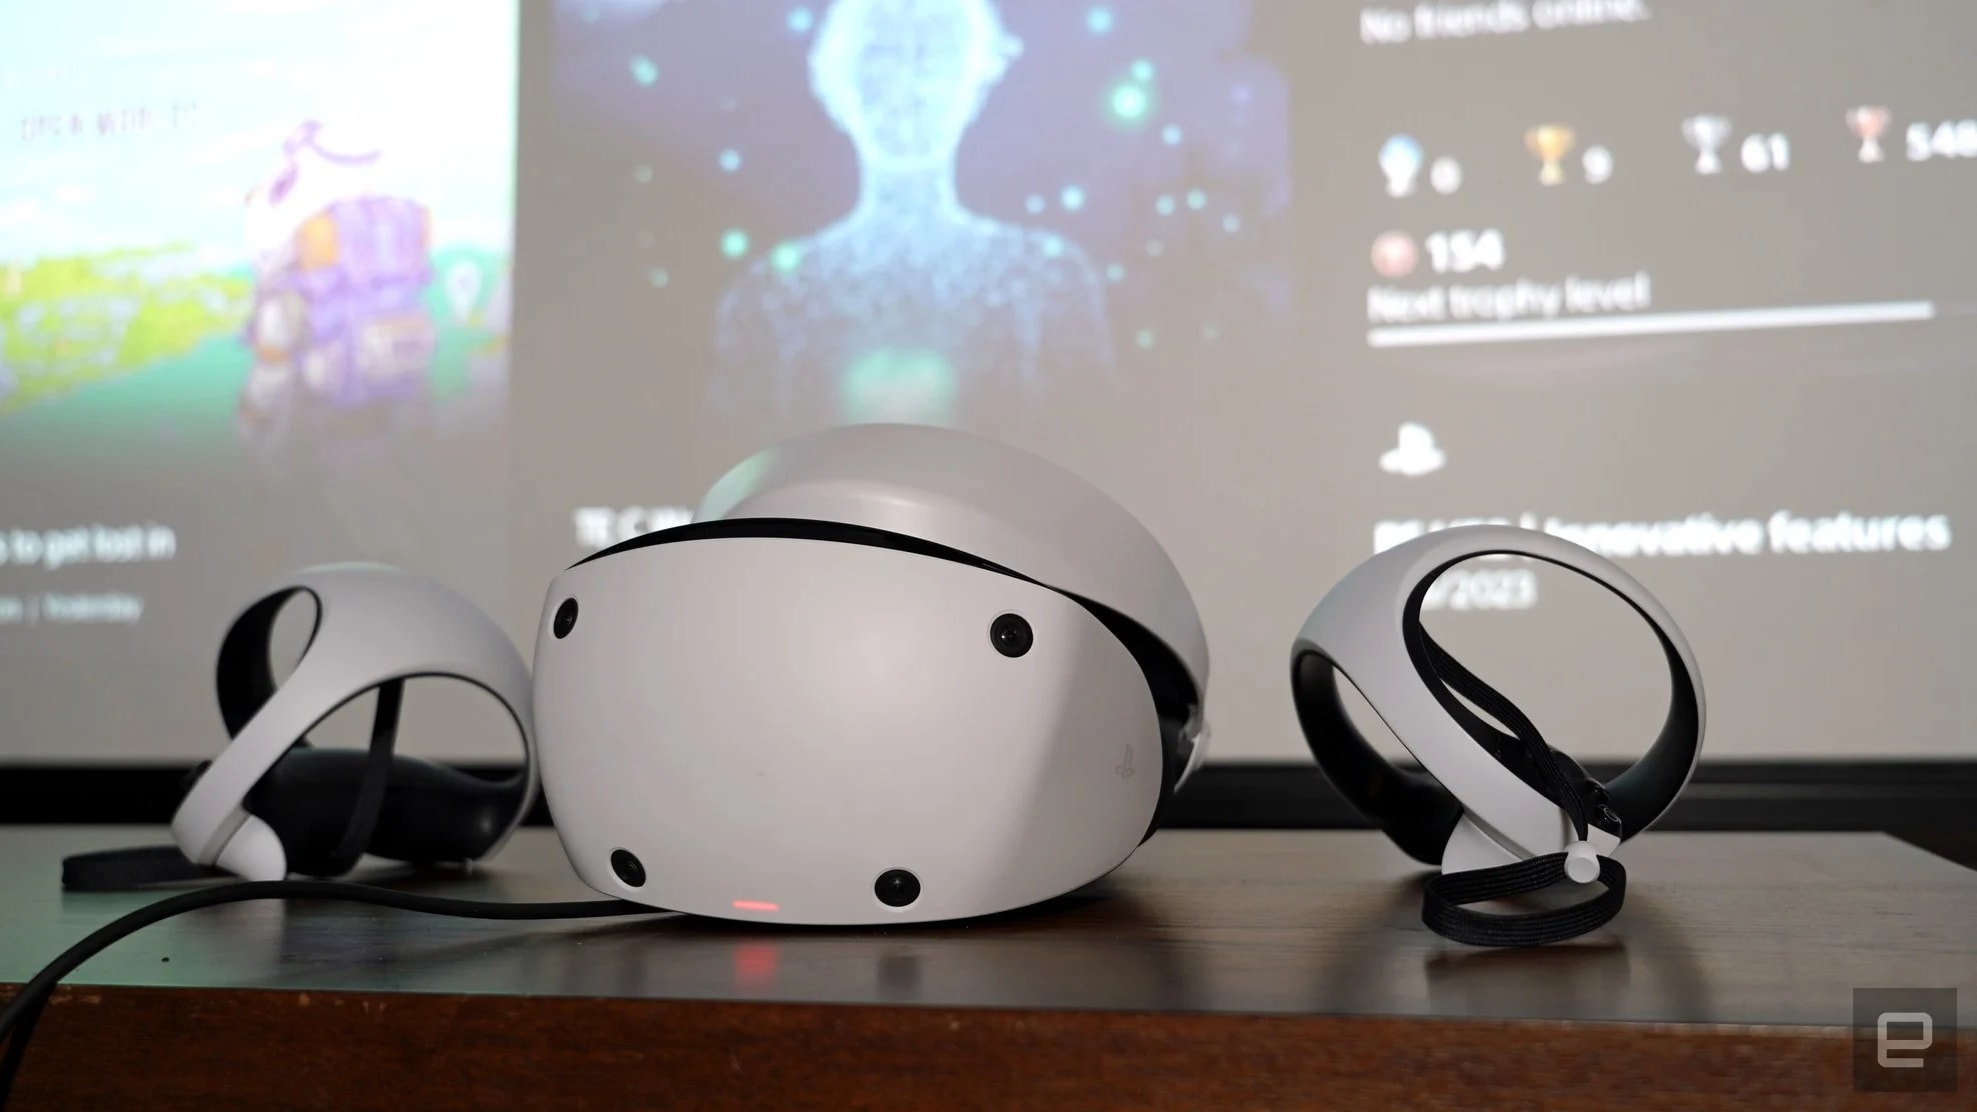 Jirafa Aparentemente corte largo PlayStation VR2 review: A great headset that should be cheaper | Engadget